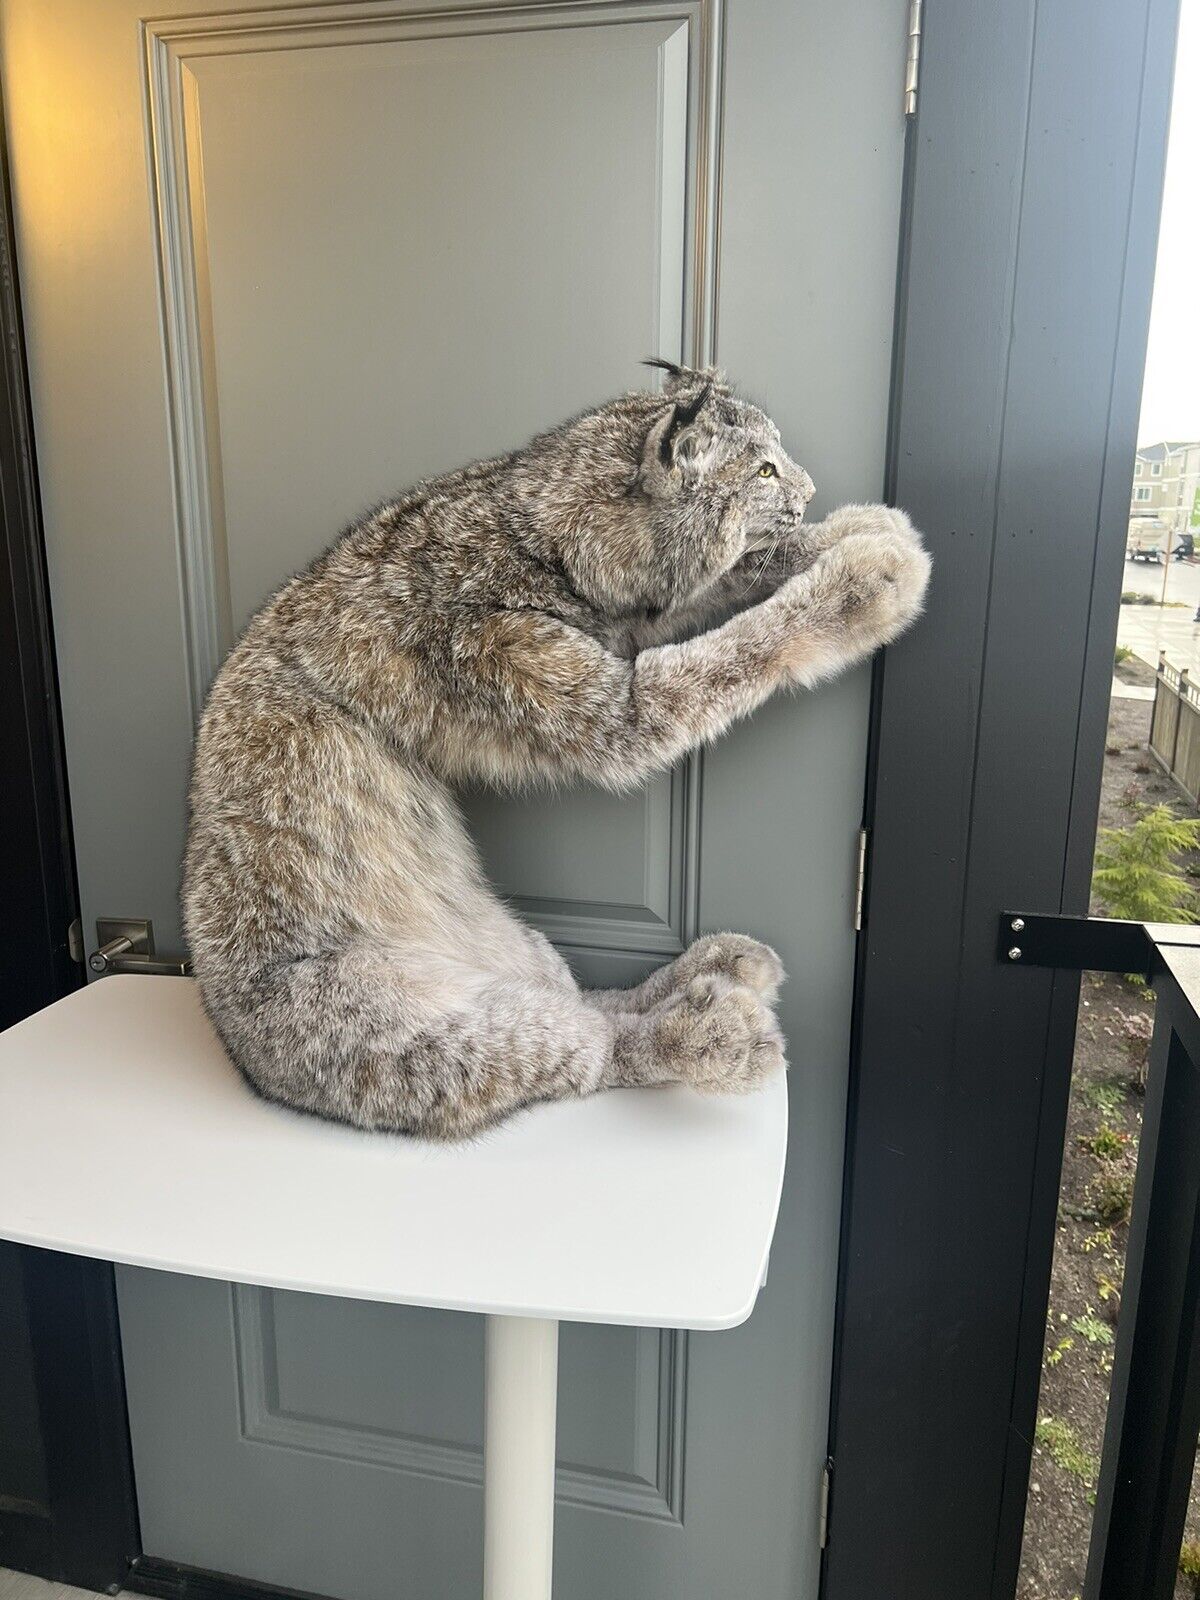 Full Mount Alaskan Lynx Real Fur Taxidermy Life Size